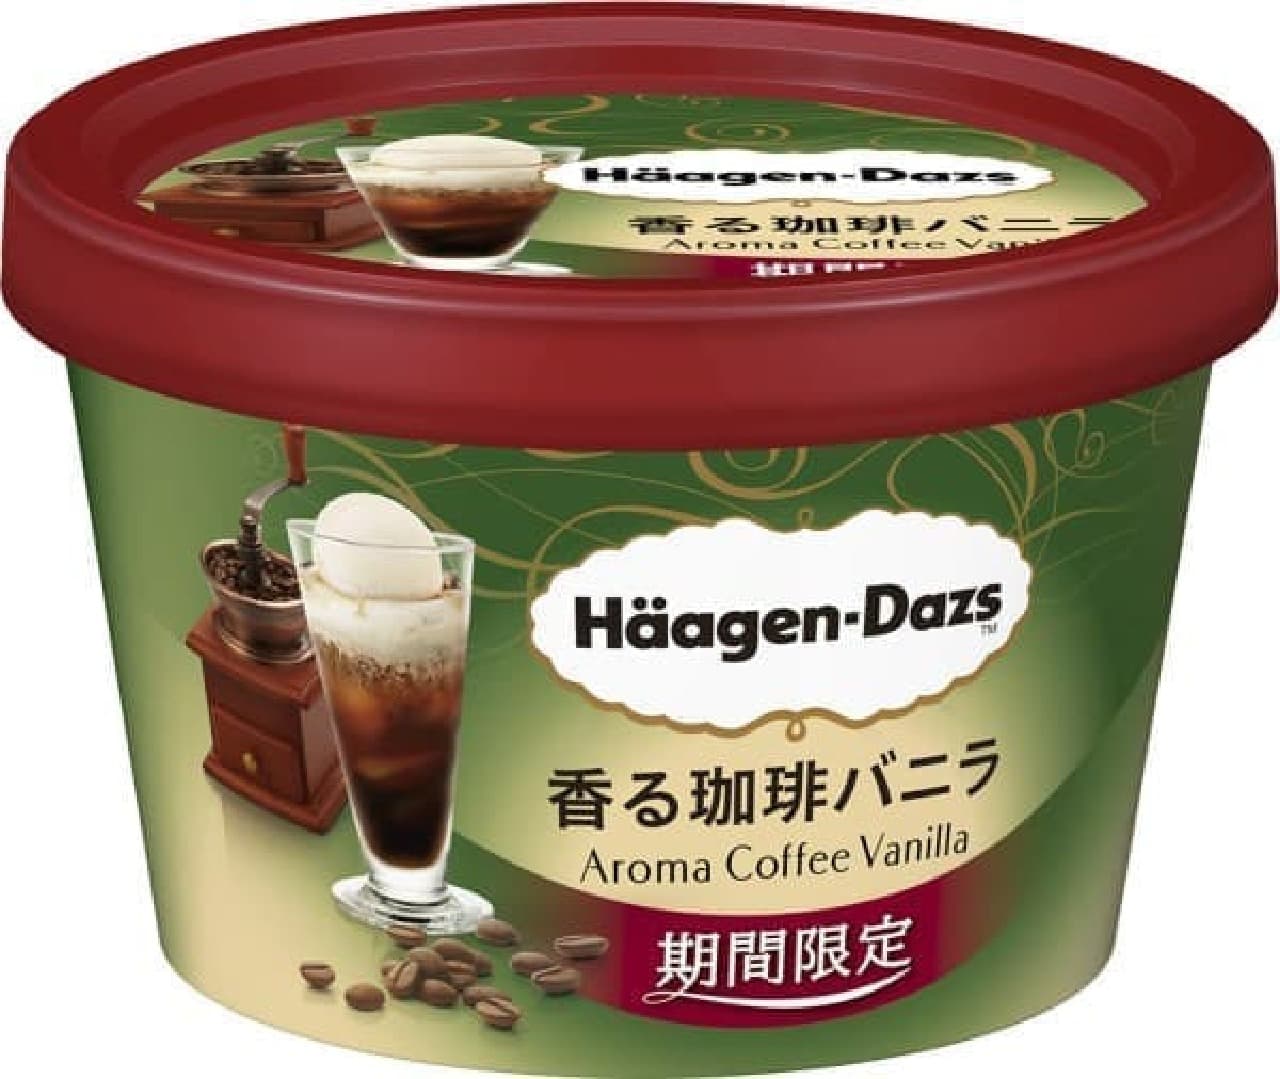 Haagen-Dazs Mini Cup "Scented Coffee Vanilla"